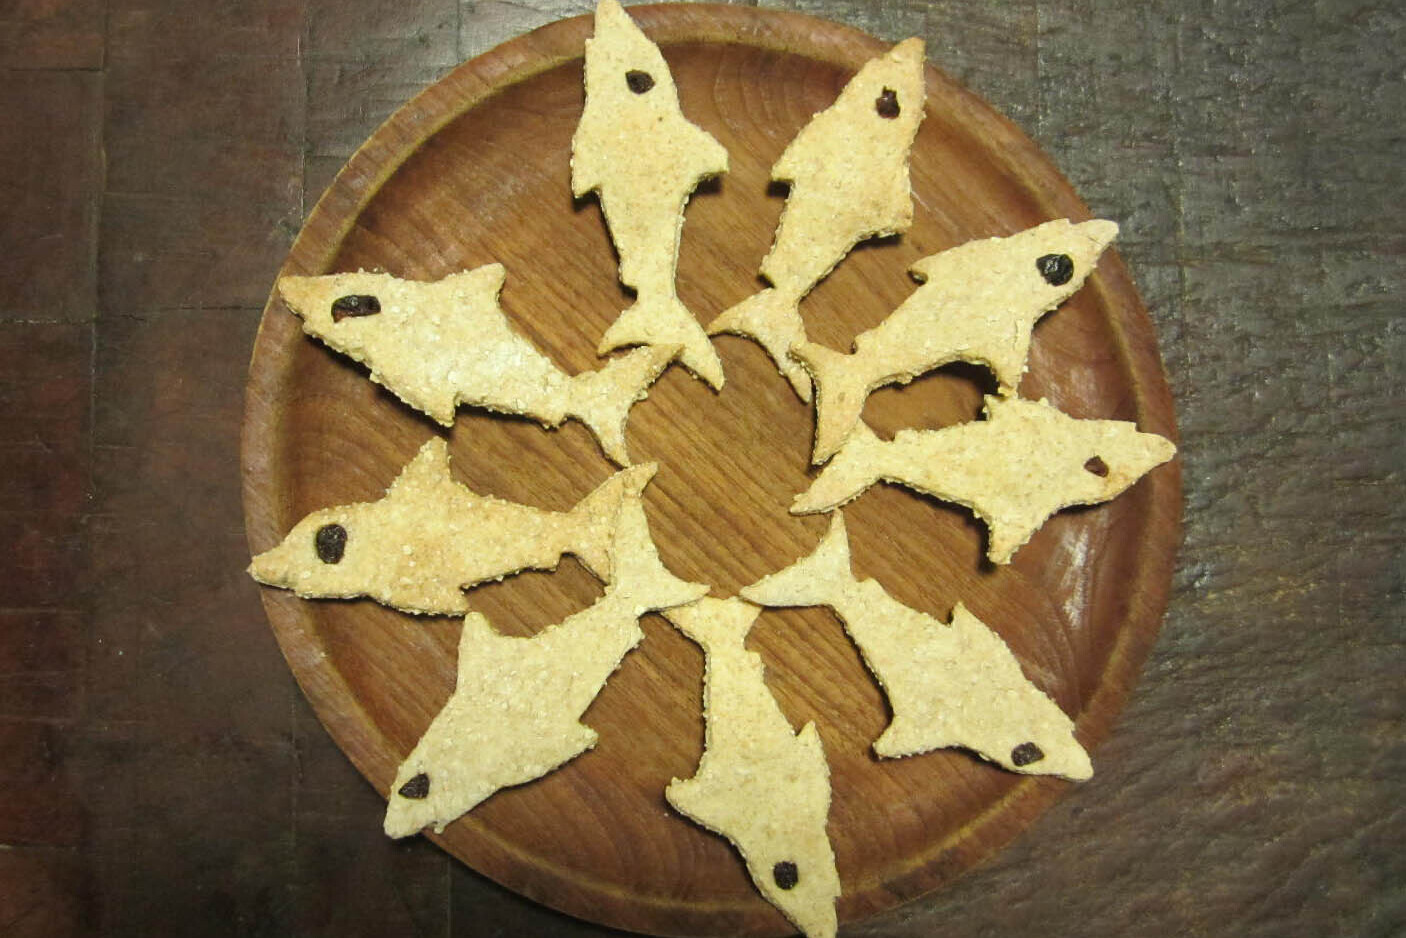 Shark-shaped wheat crackers